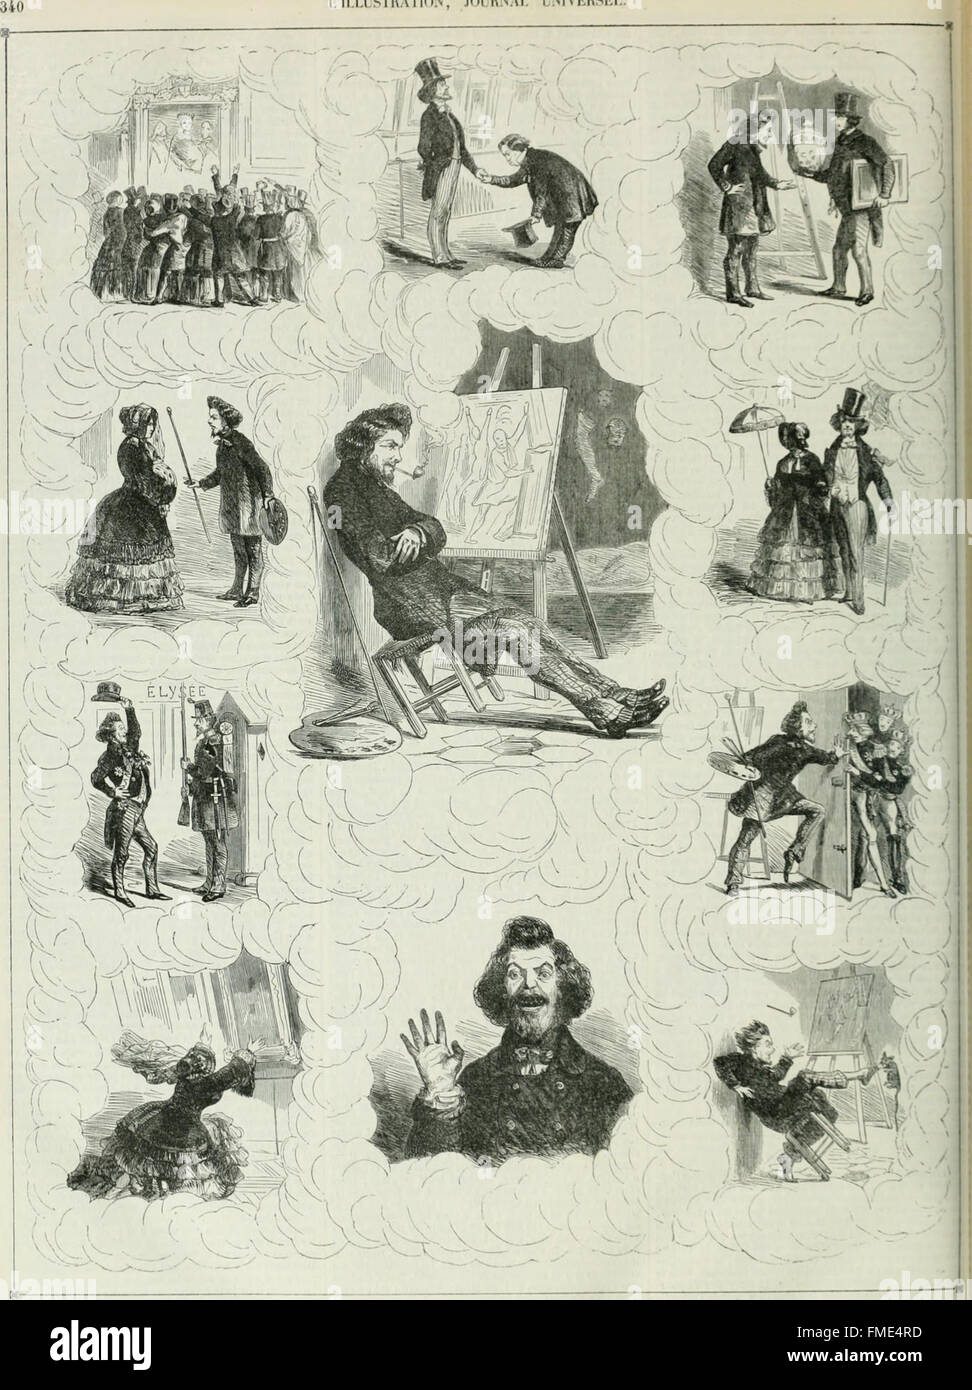 L'illustration - journal universel (1843) Stock Photo